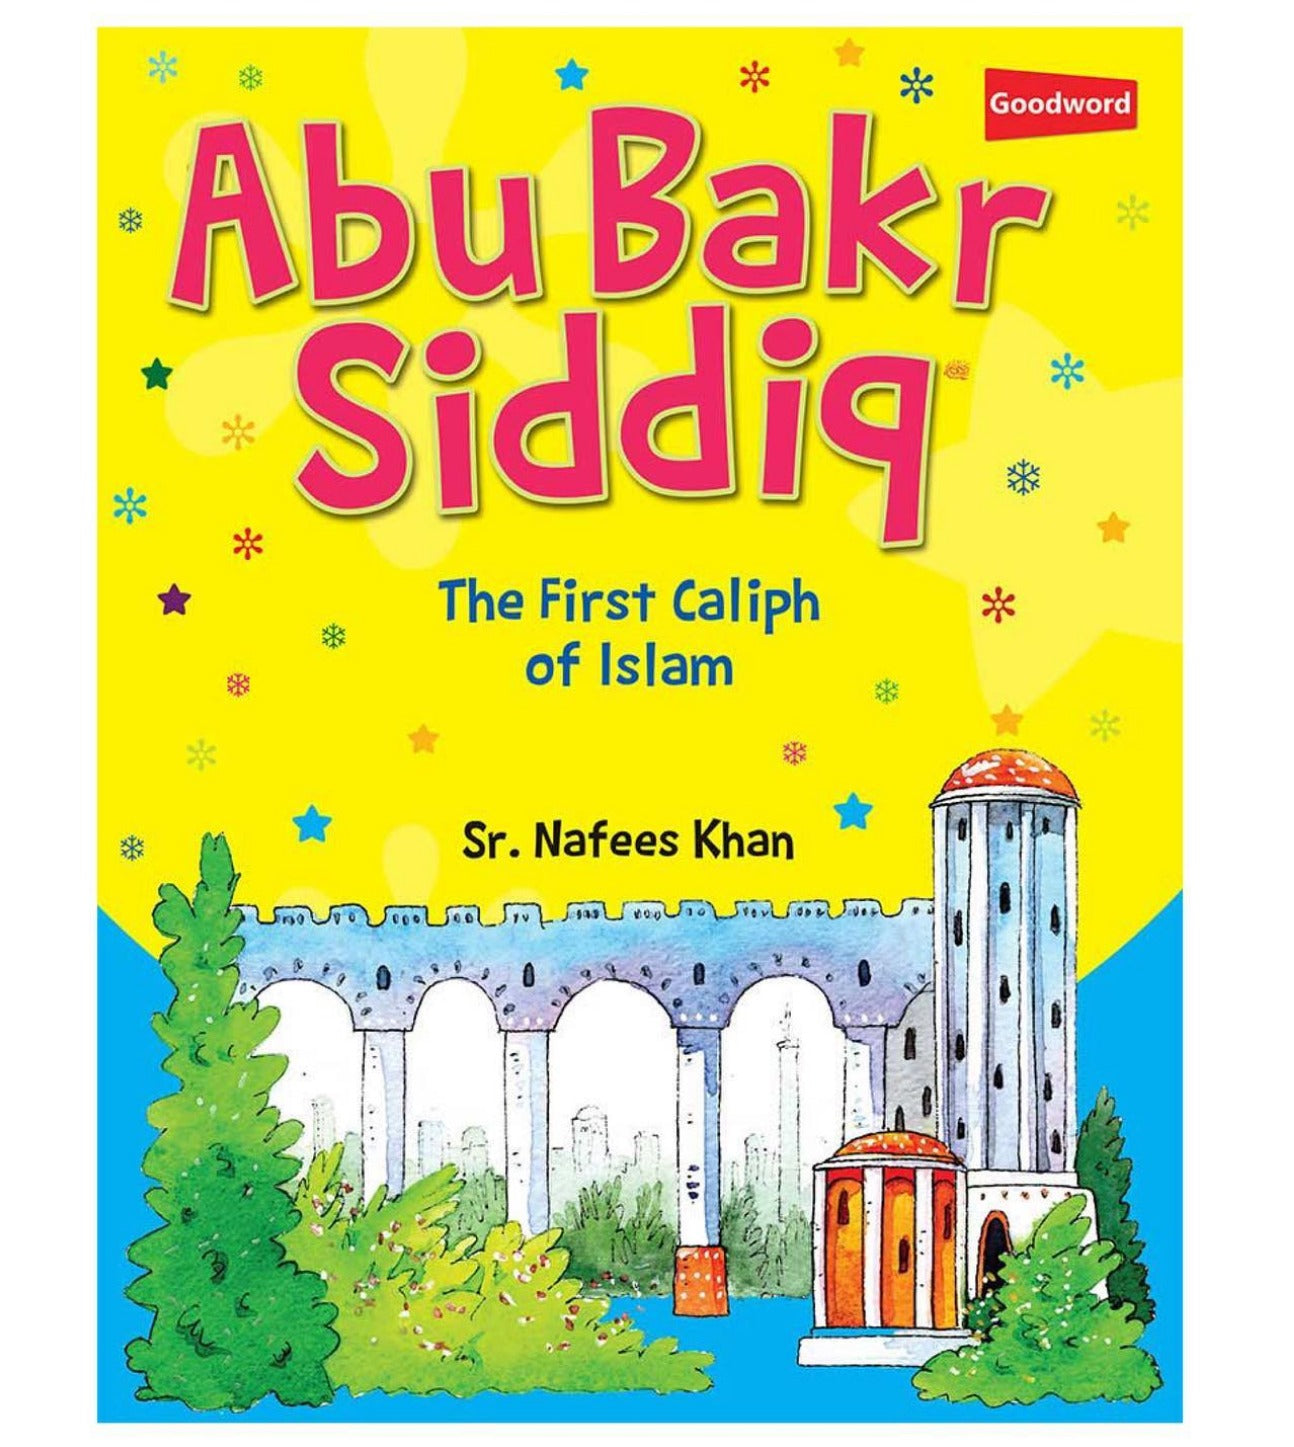 Abu Bakr Siddiq (The first caliph of Islam)